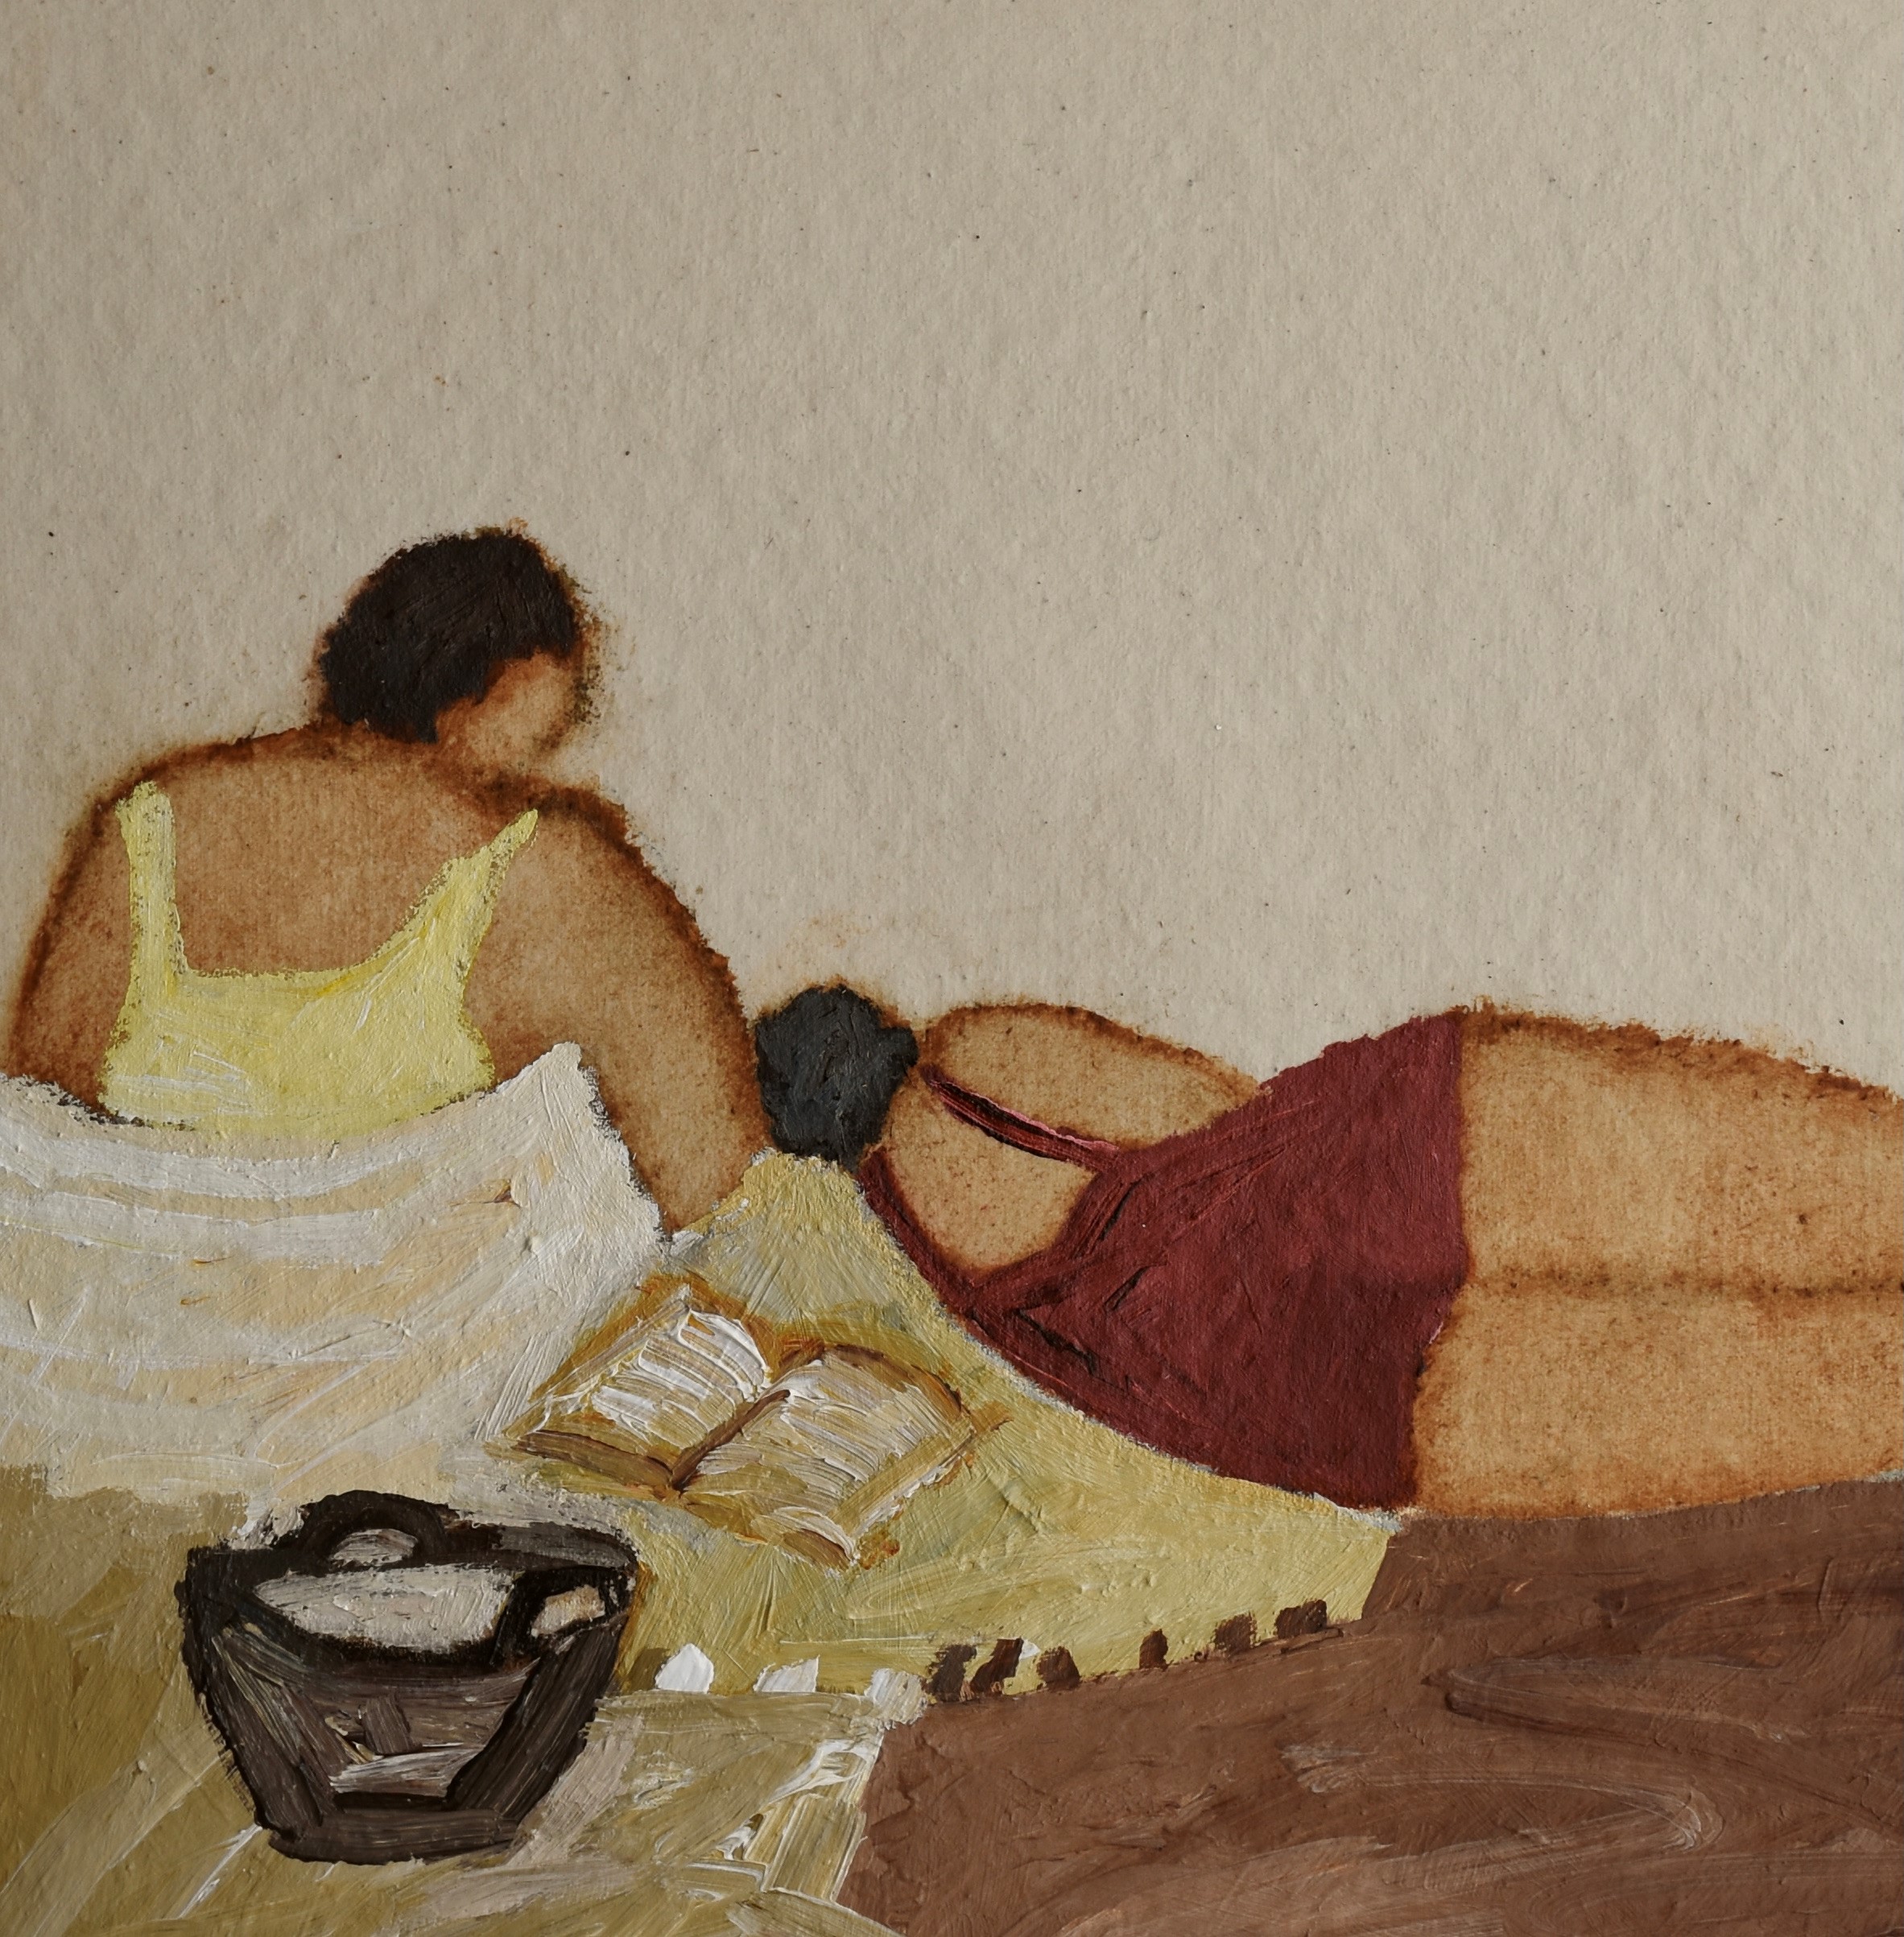 Eleanor Millard 'The Sunbathers' acrylic on canvas 40 x 40cm $2,800